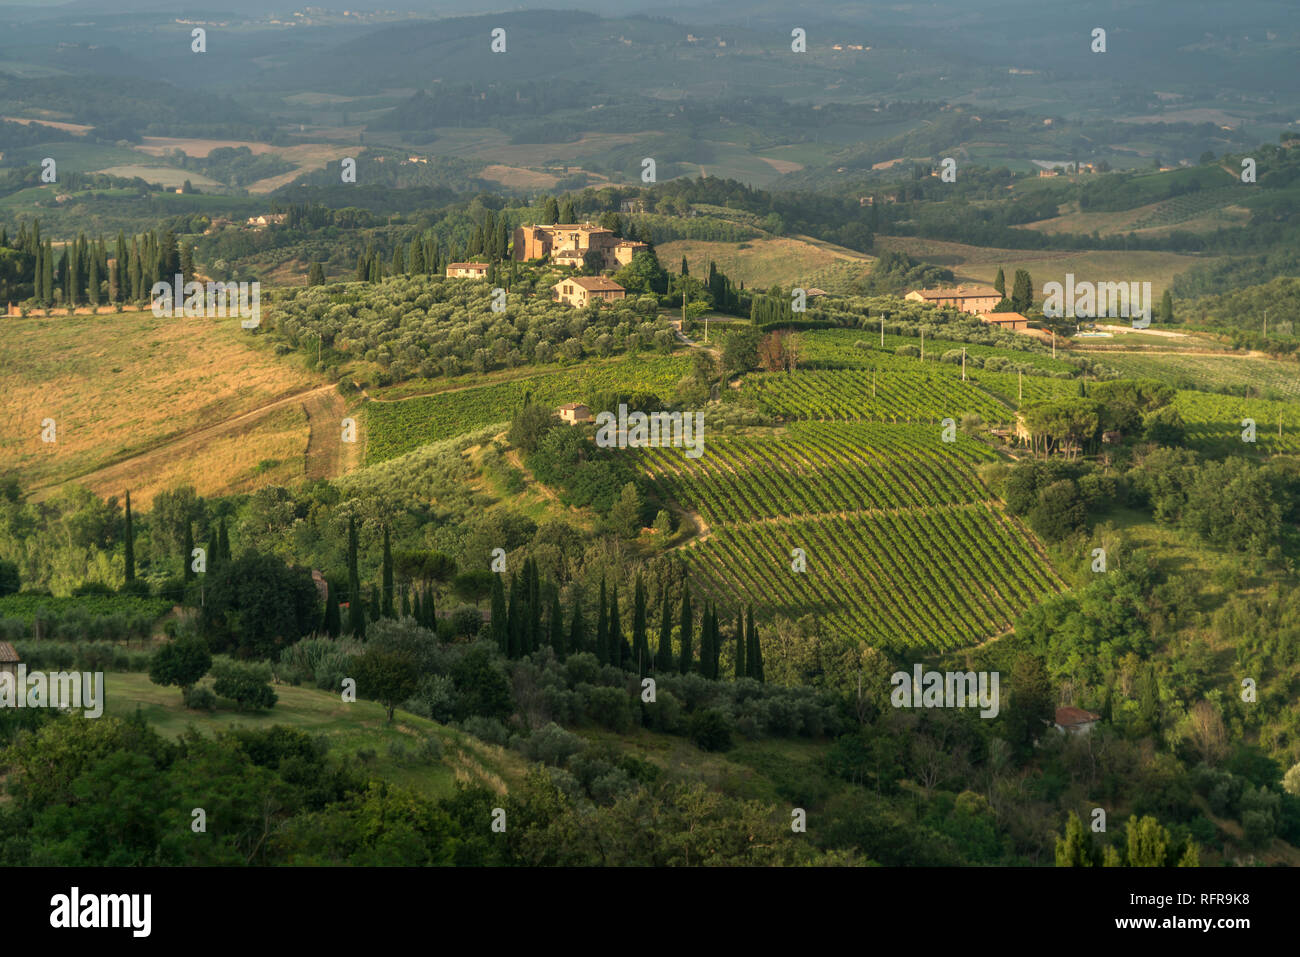 Typische toskanische Landschaft bei San Gimignano, Toskana, Italien  |   typical tuscan landscape around San Gimignano, Tuscany, Italy Stock Photo